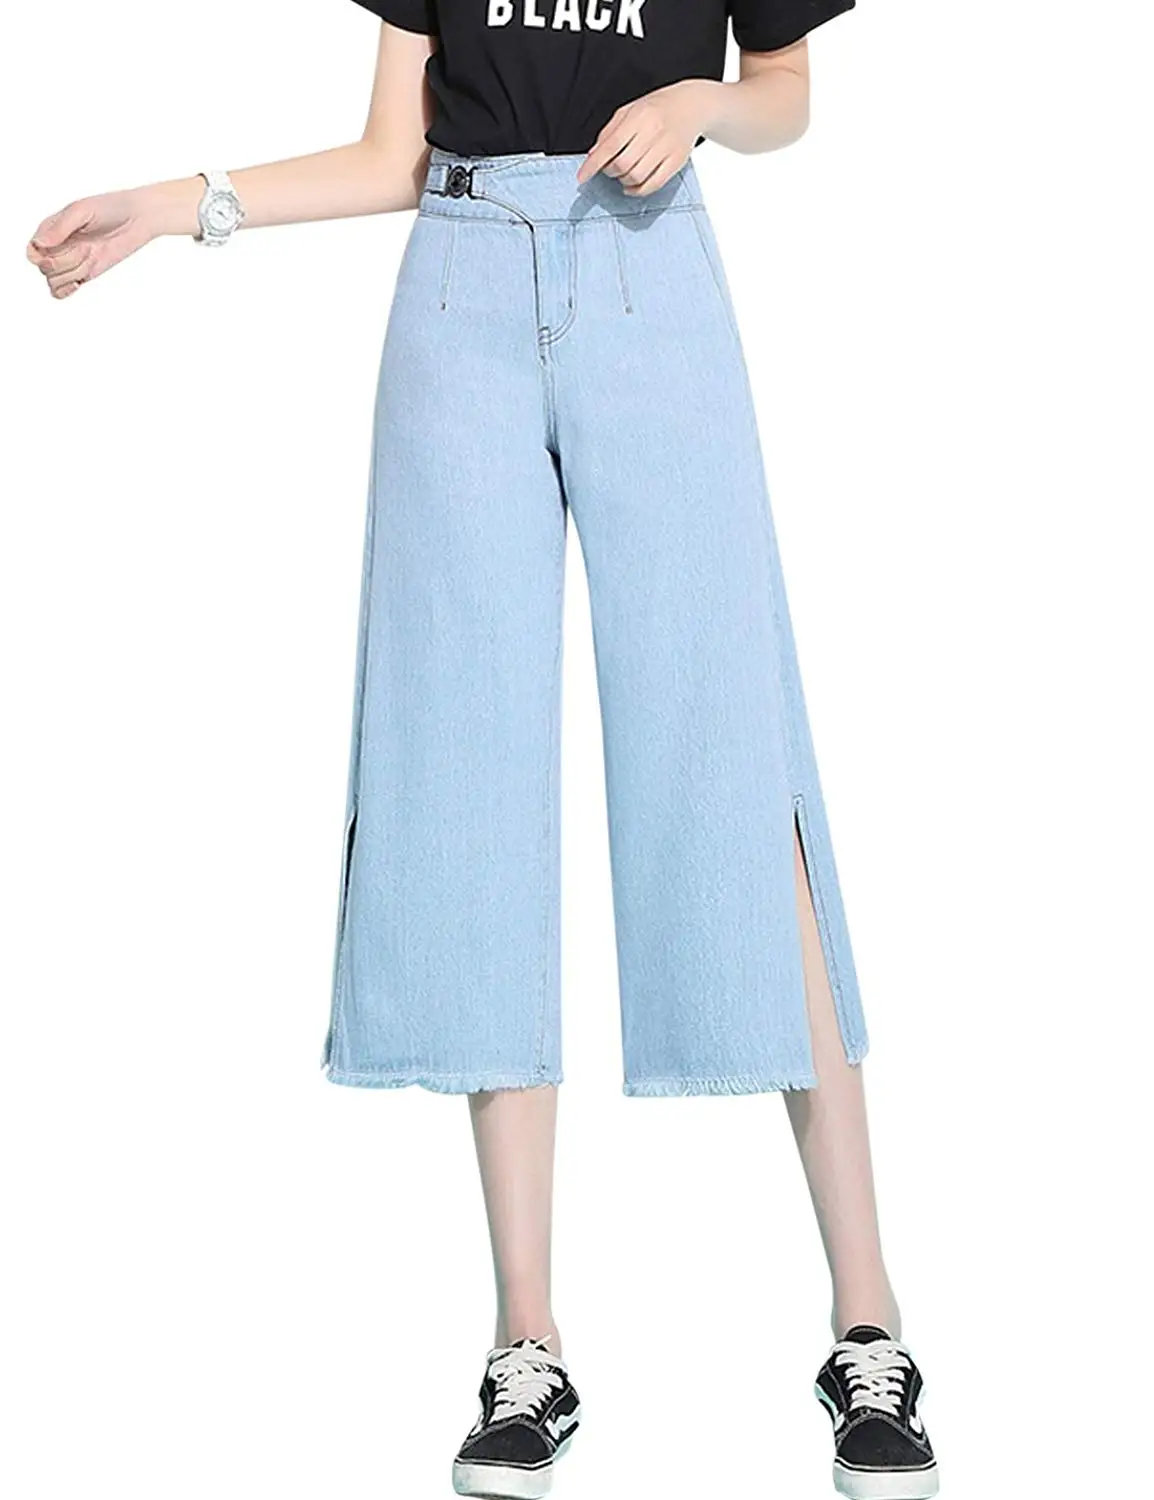 capri length jeans